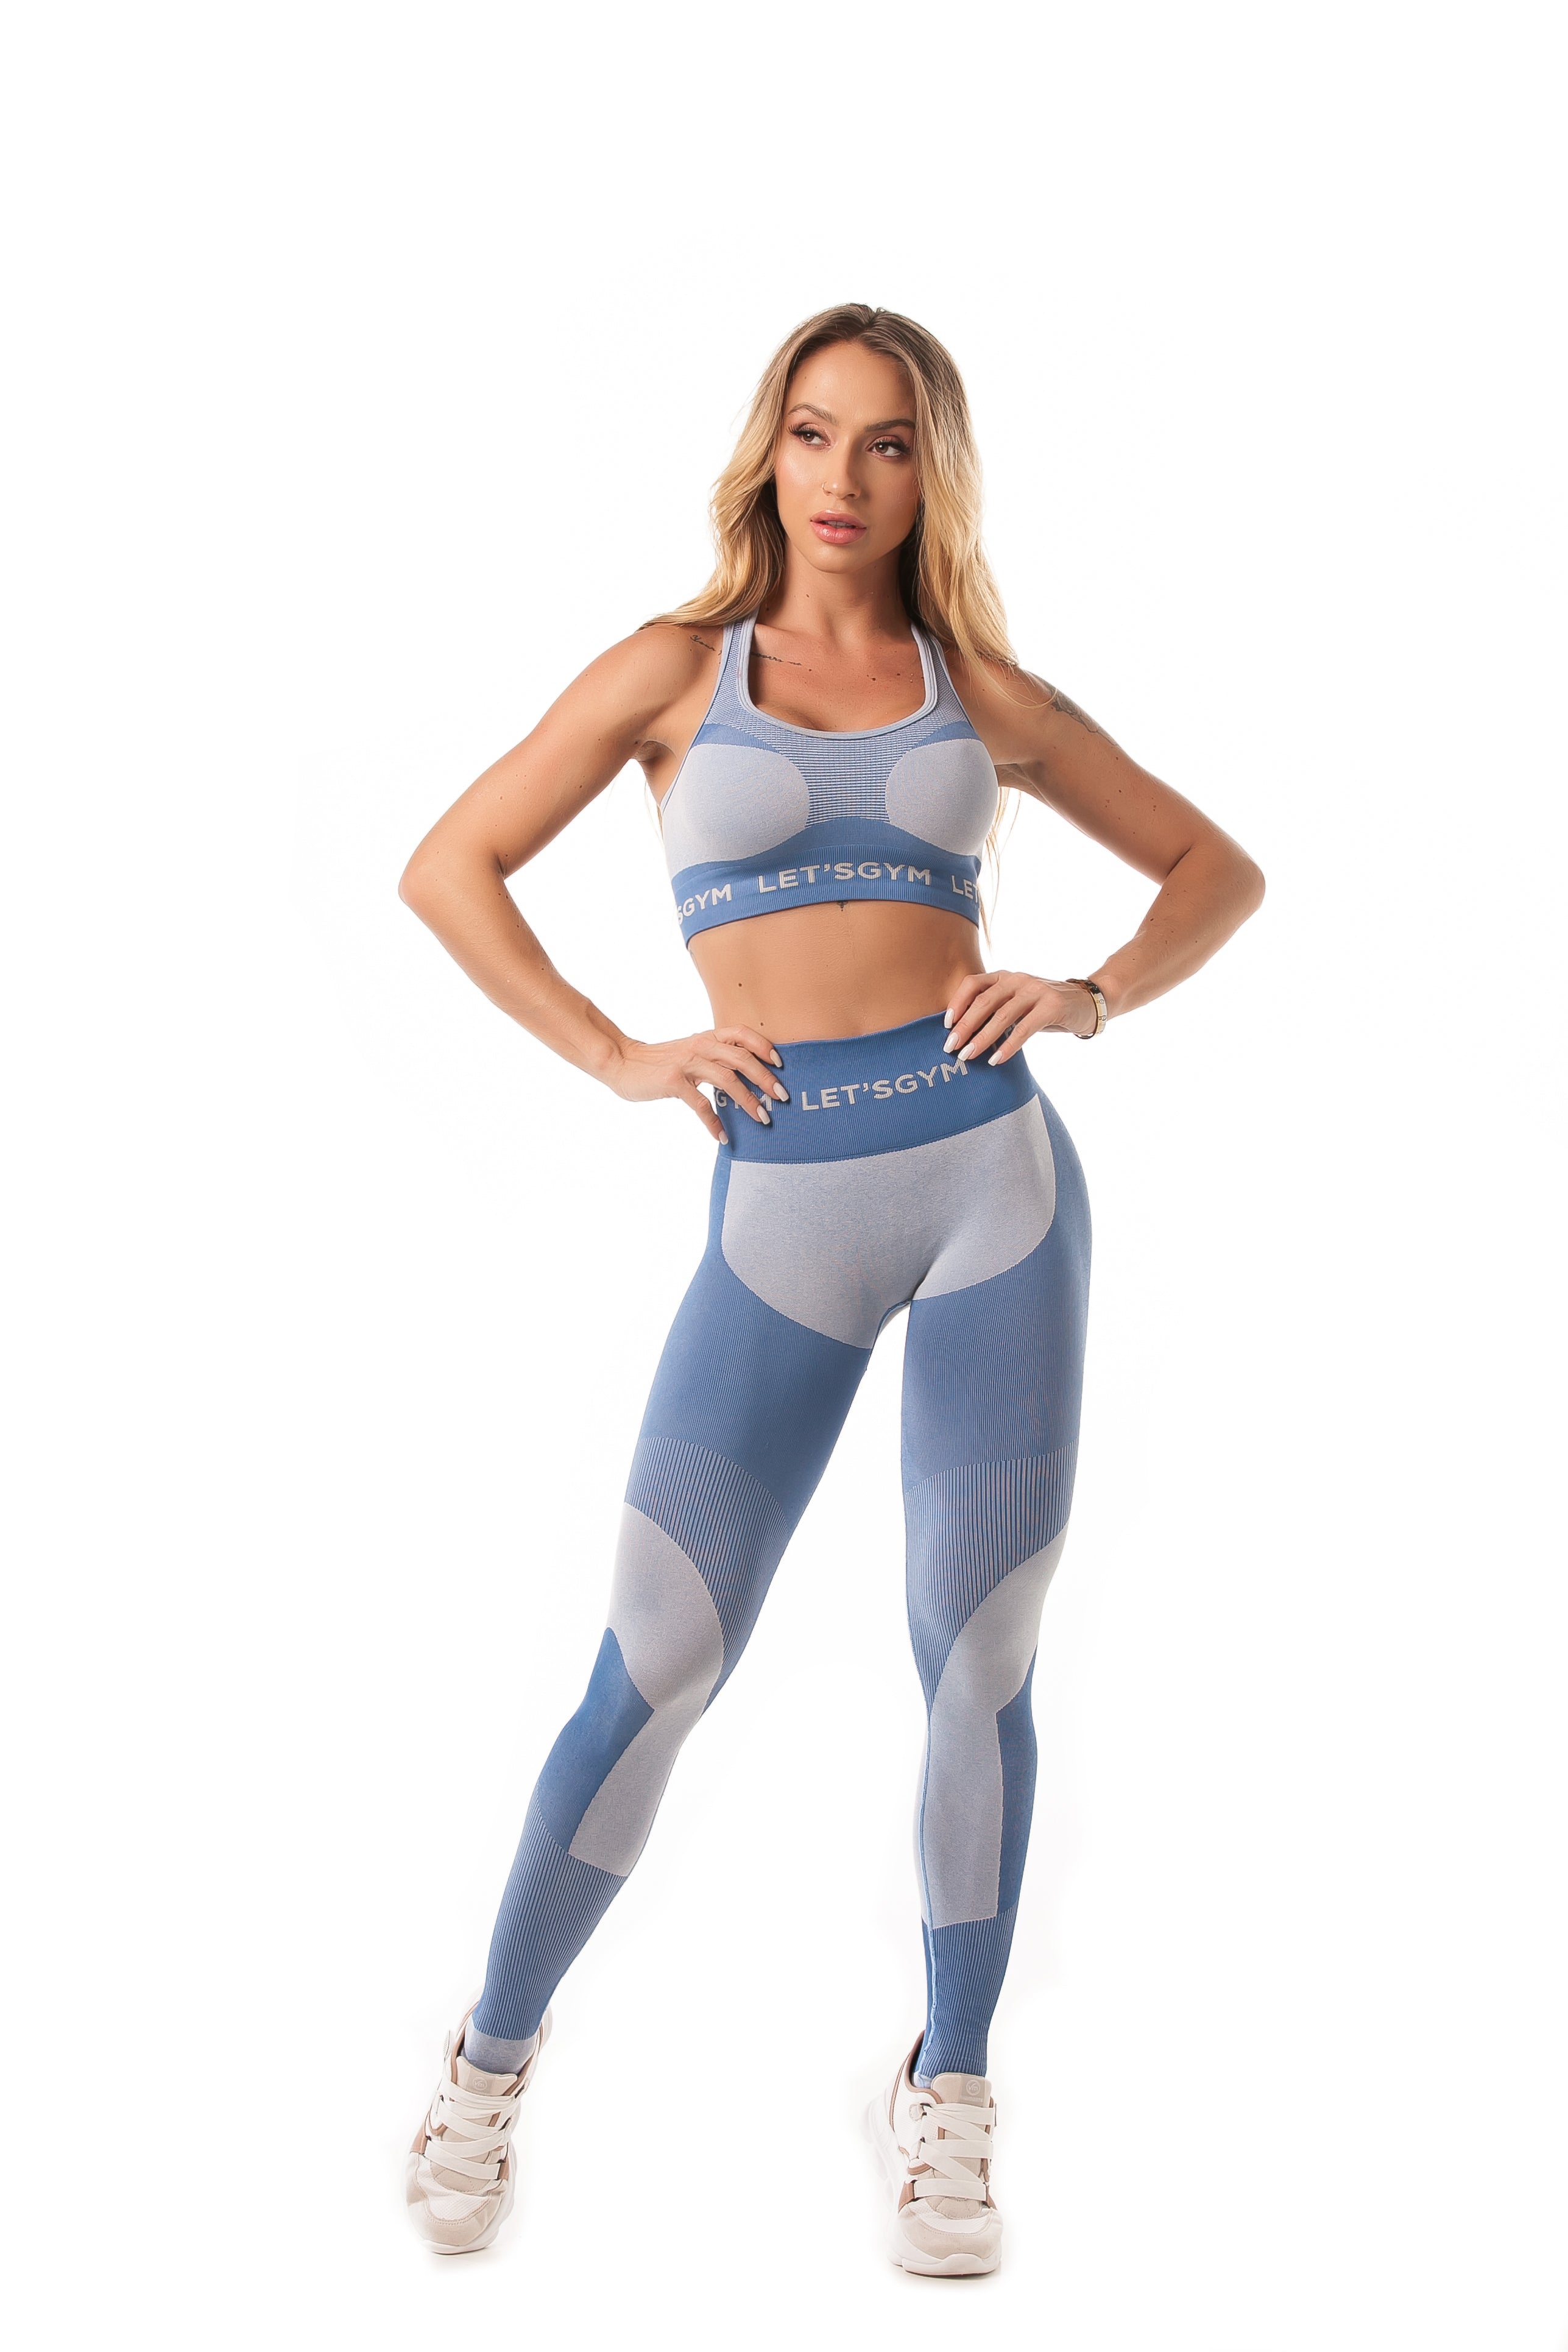 Let's Gym USA Brazilian Fashion Fitness Leggings Seamless Baby Blue